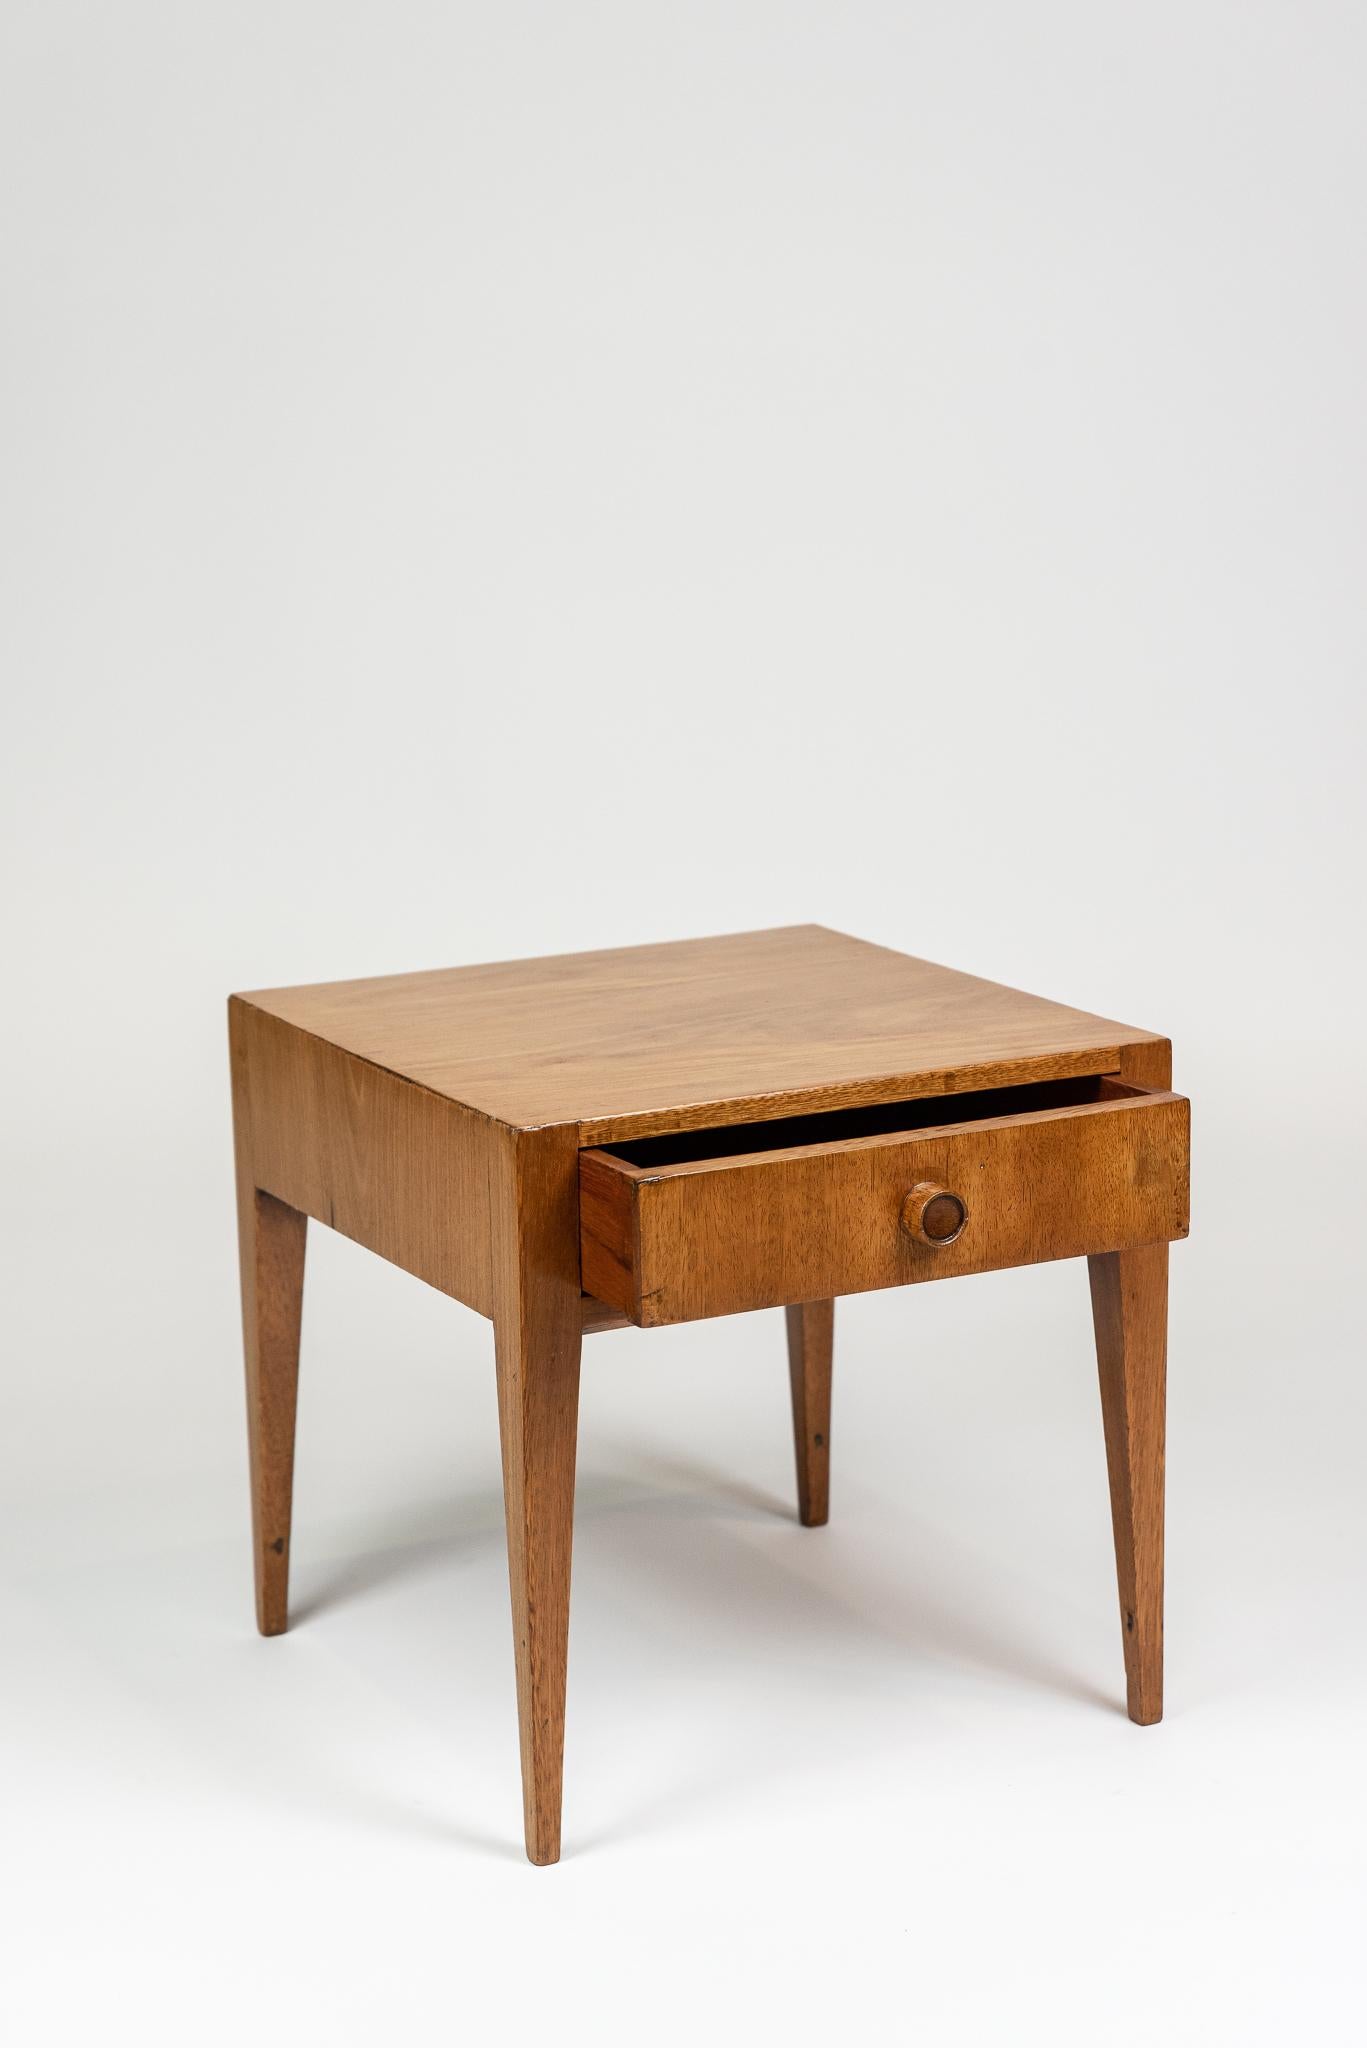 Hand-Crafted Joaquim Tenreiro, Bedside Table, 1947